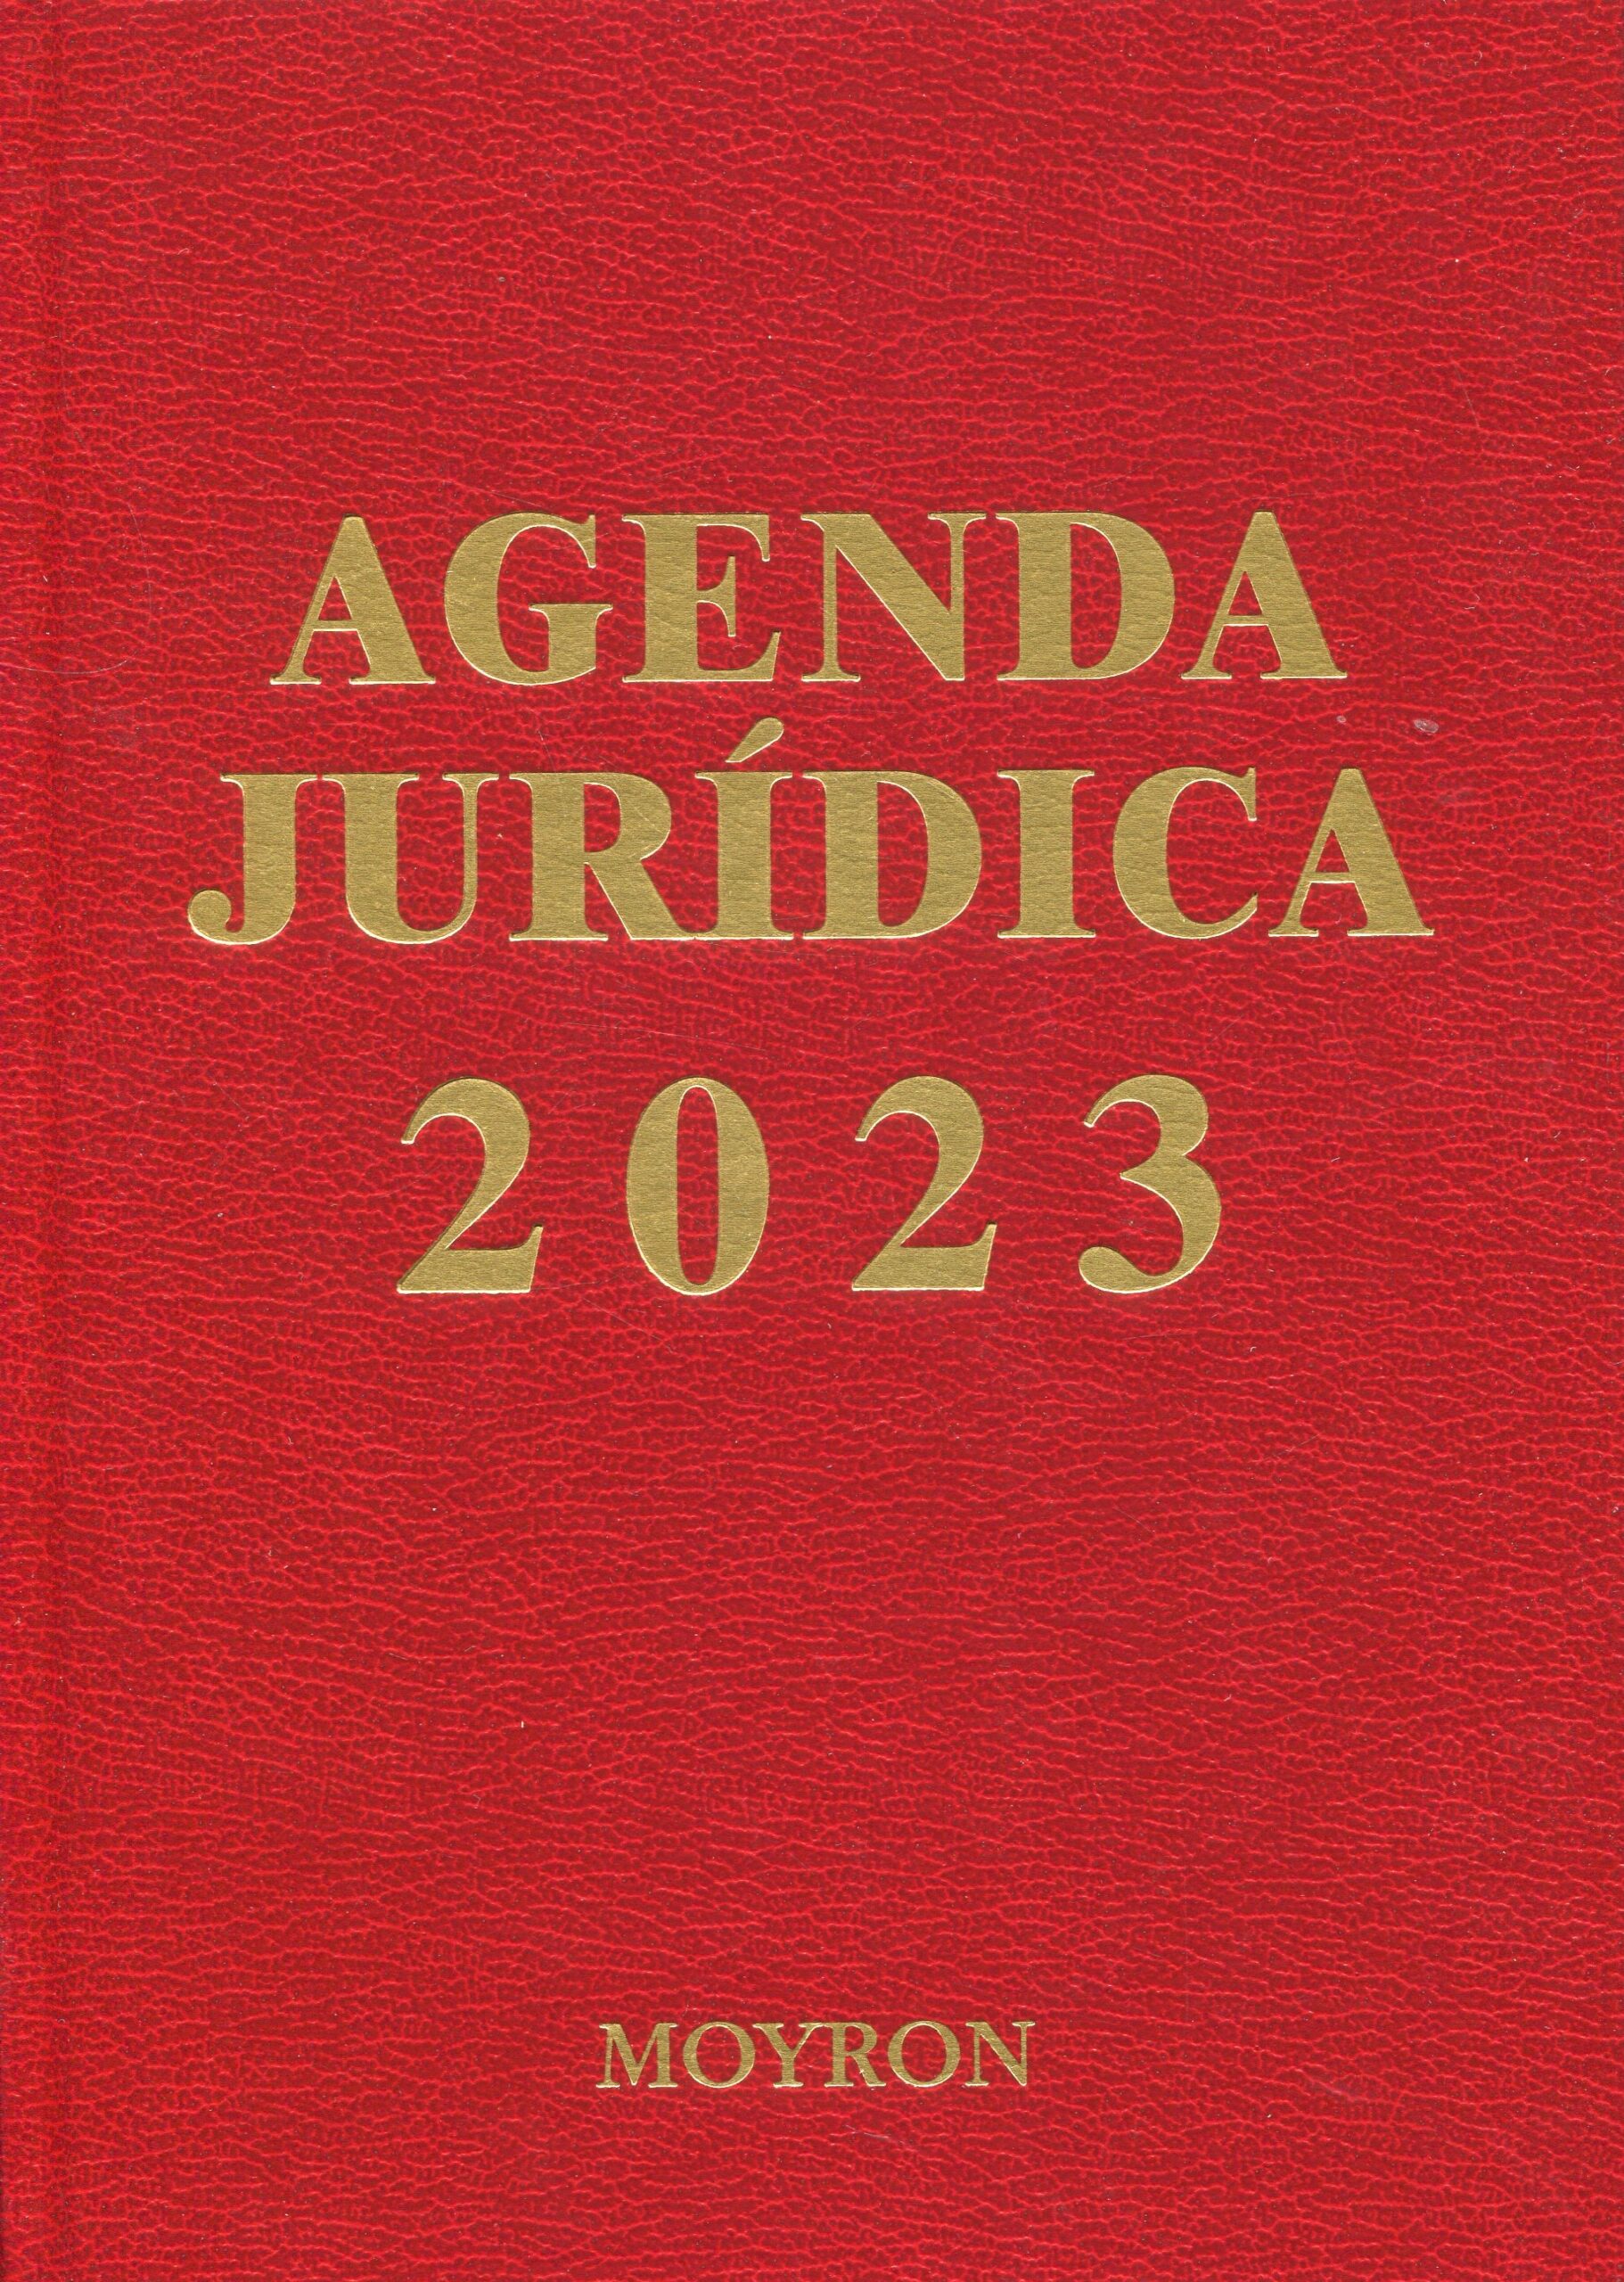 Agenda Jurídica Moyron 2023. 101086750